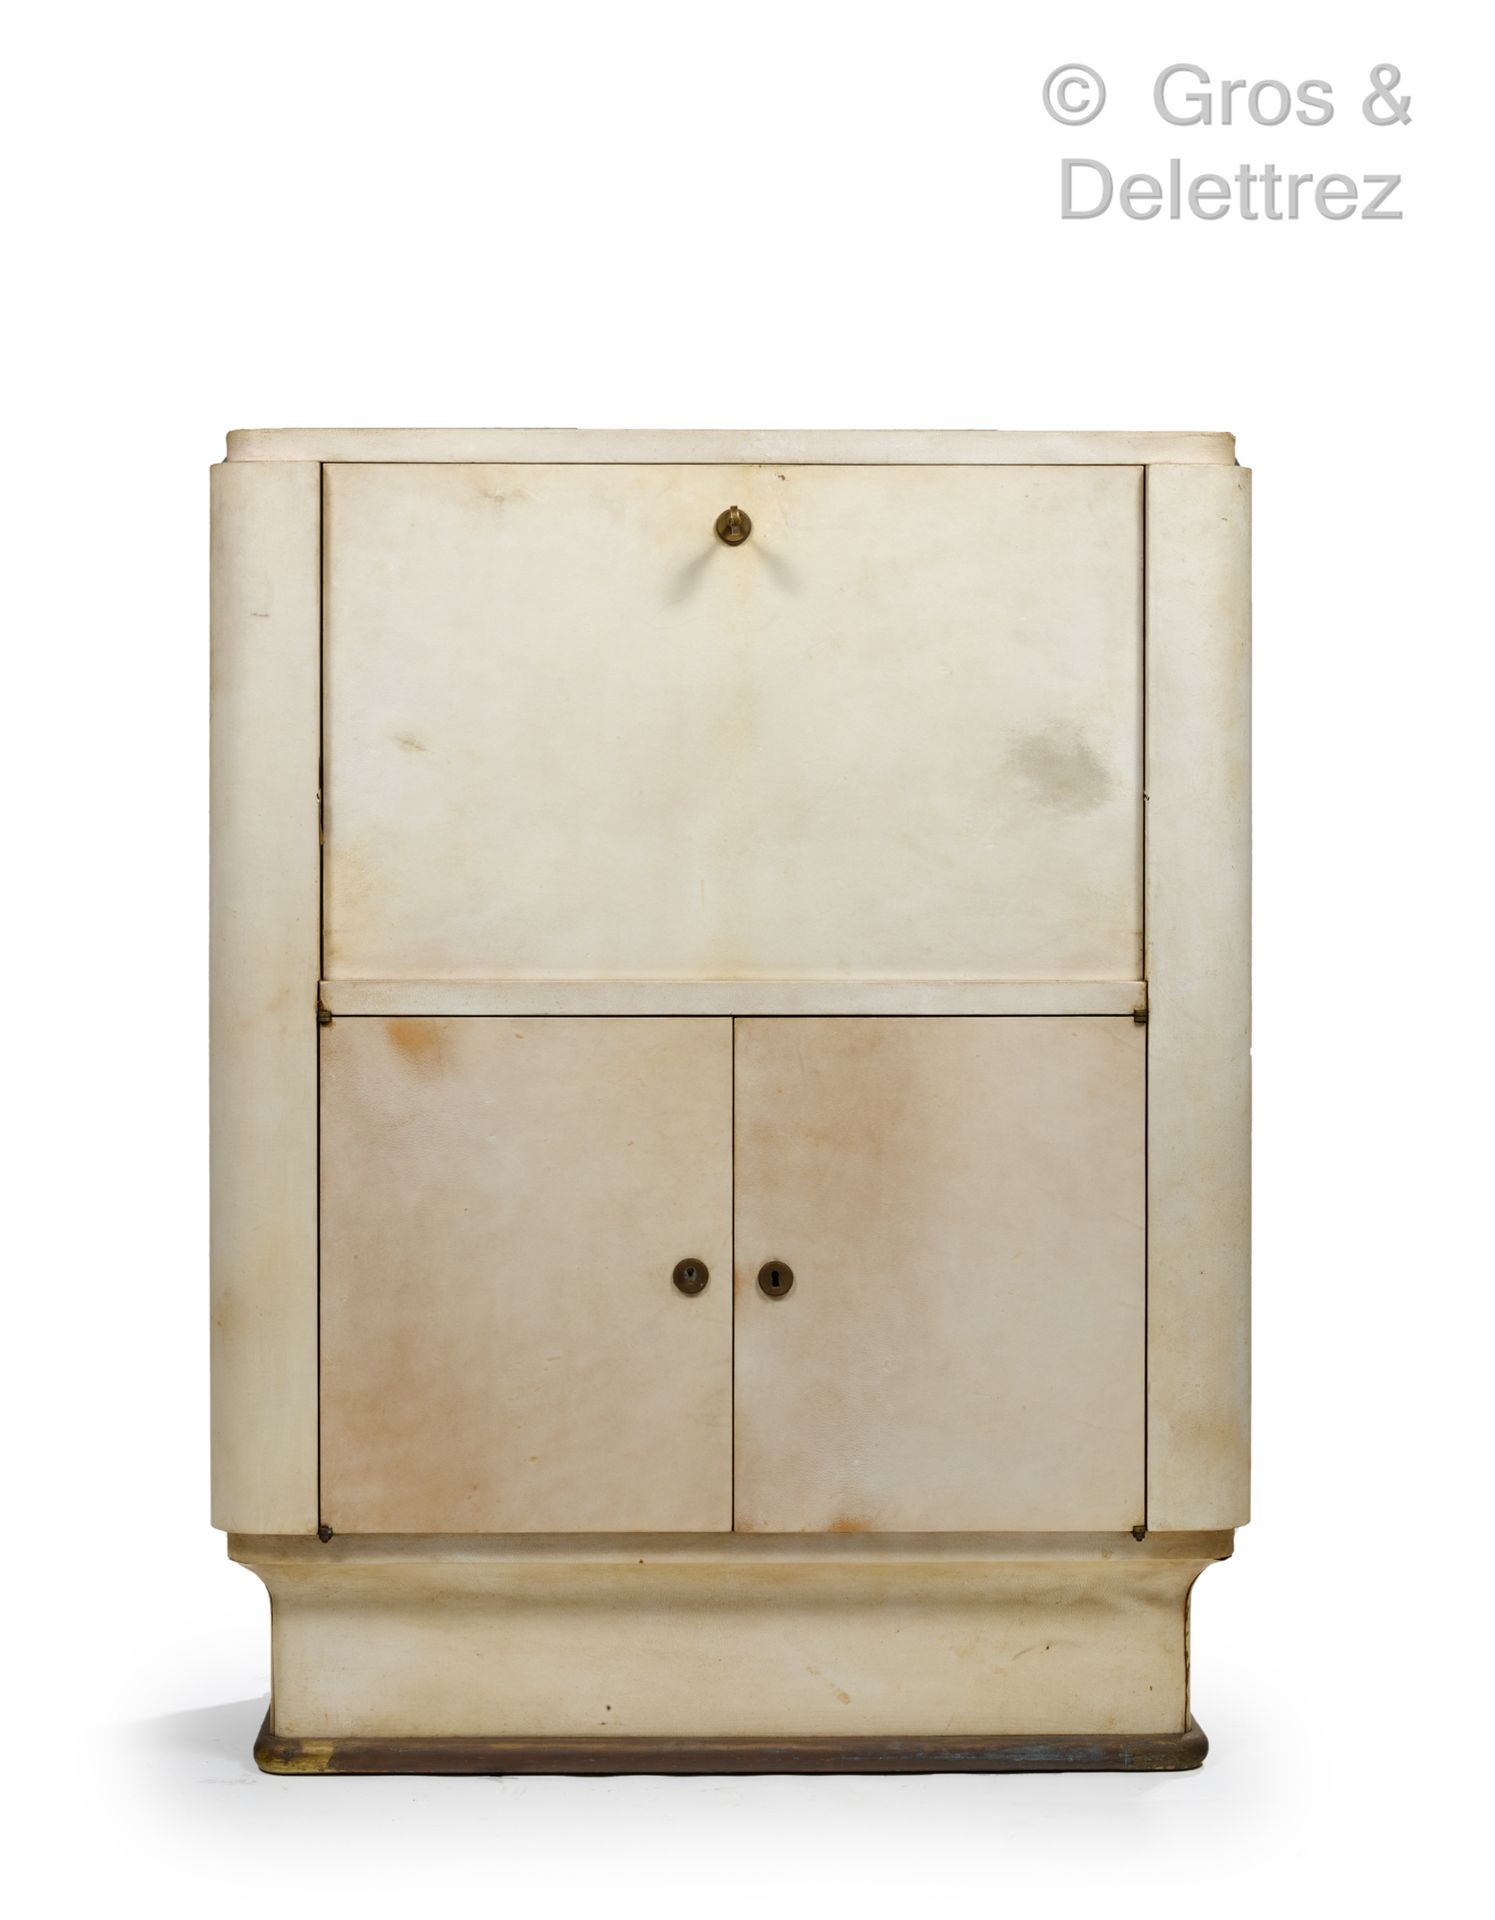 Null 勒内-德鲁埃 (1899-1993)

完全用羊皮纸覆盖的秘书，前面有一个挡板和两个门。

黄铜底座和锁具

约1930-1940年

高：116厘米&hellip;